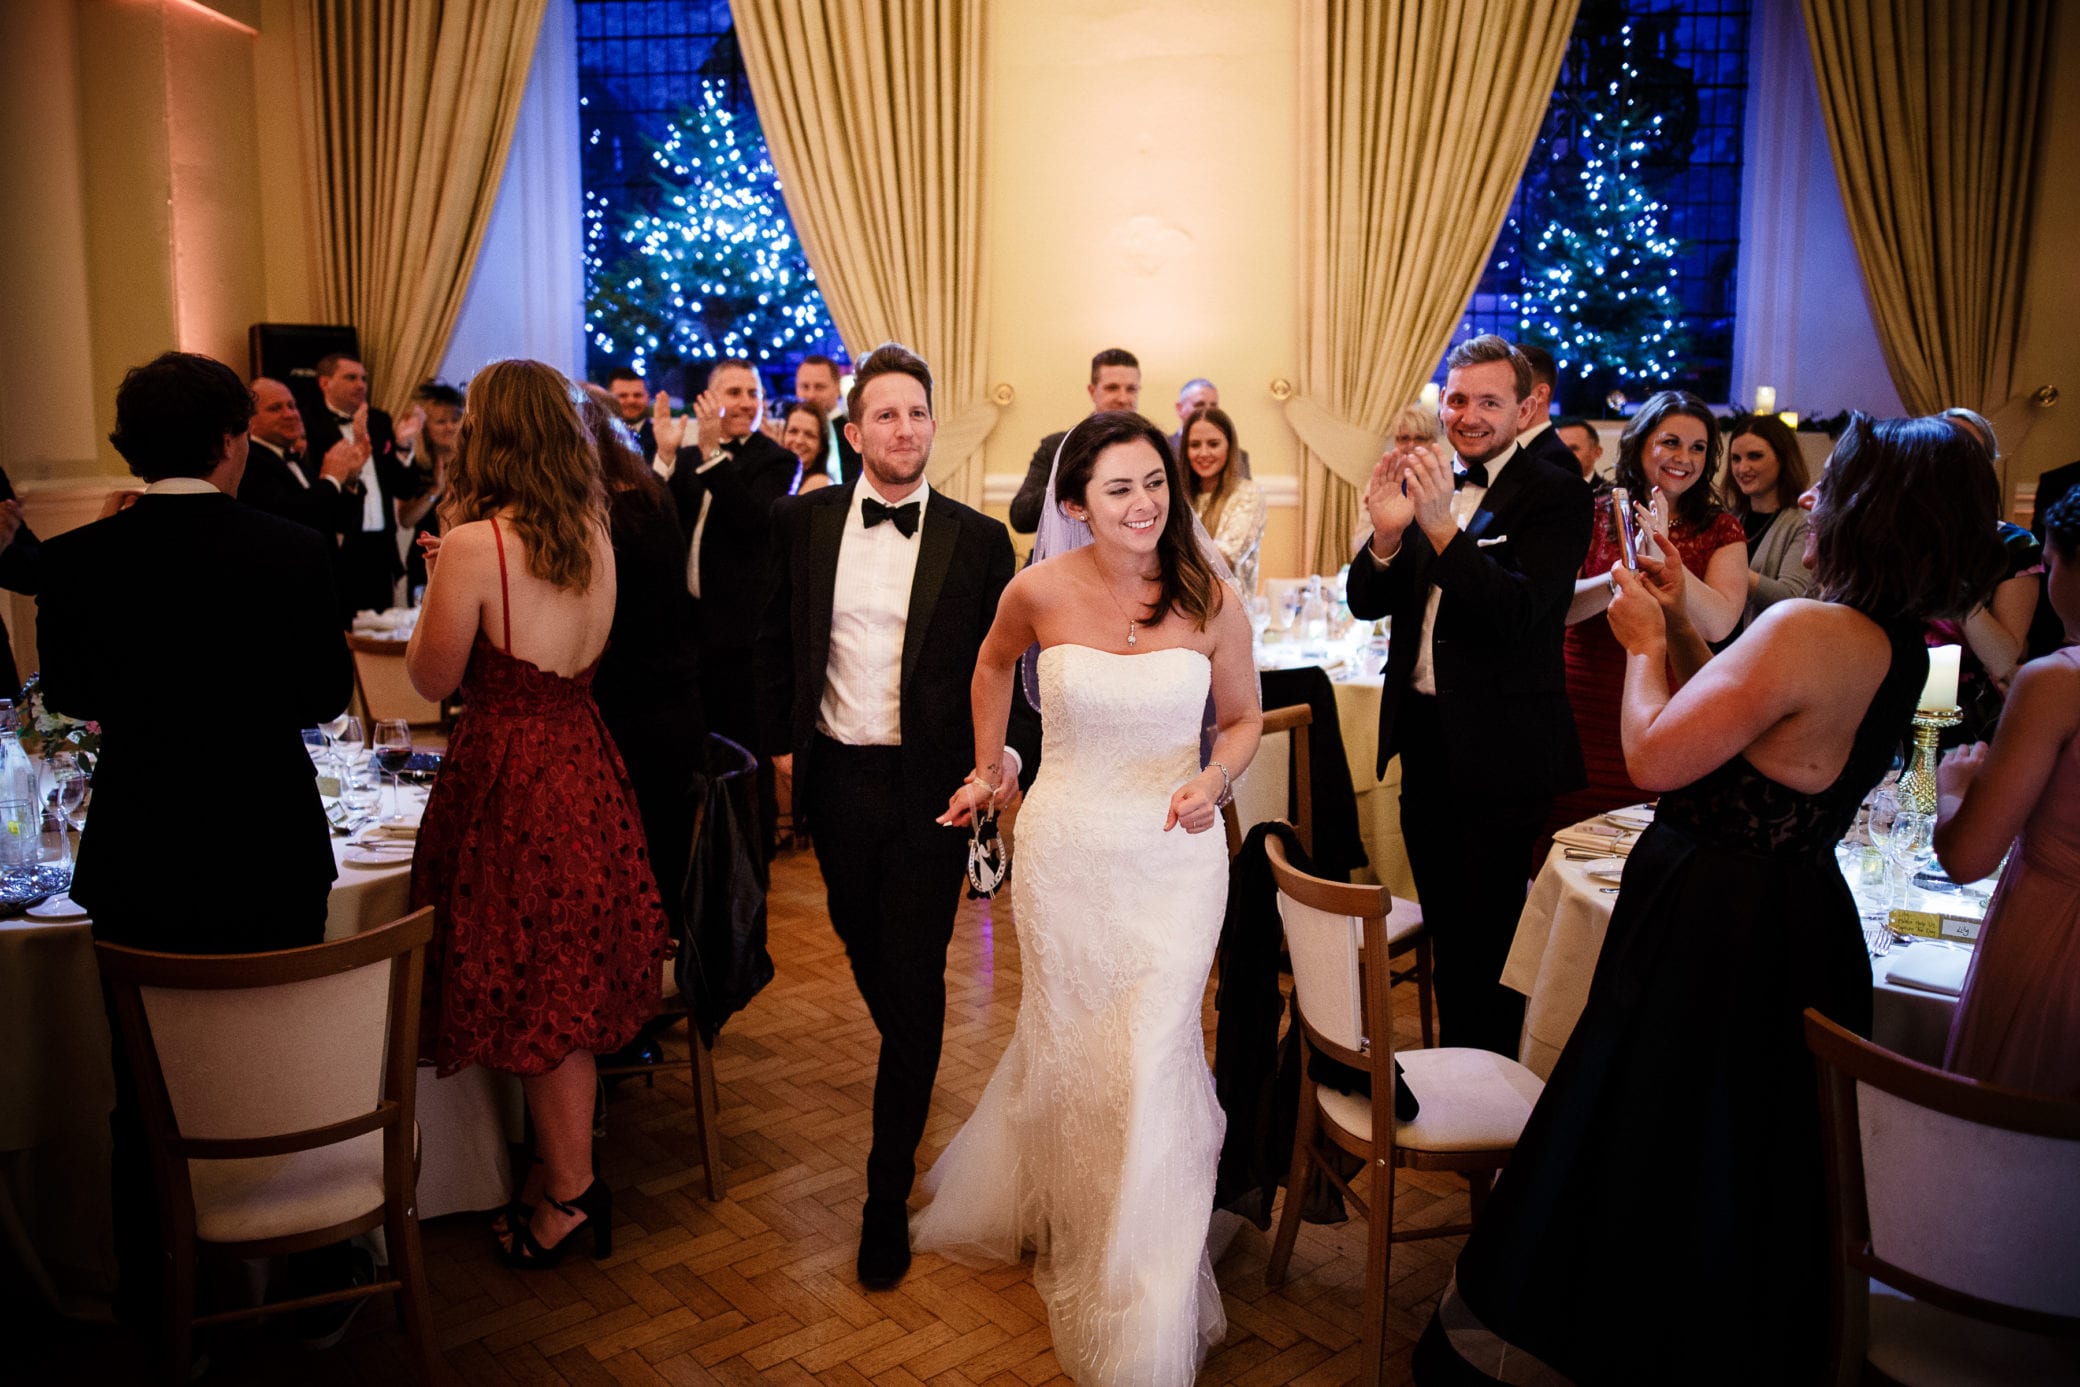 Weddings at Christmas, at Farnham Castle in Surrey